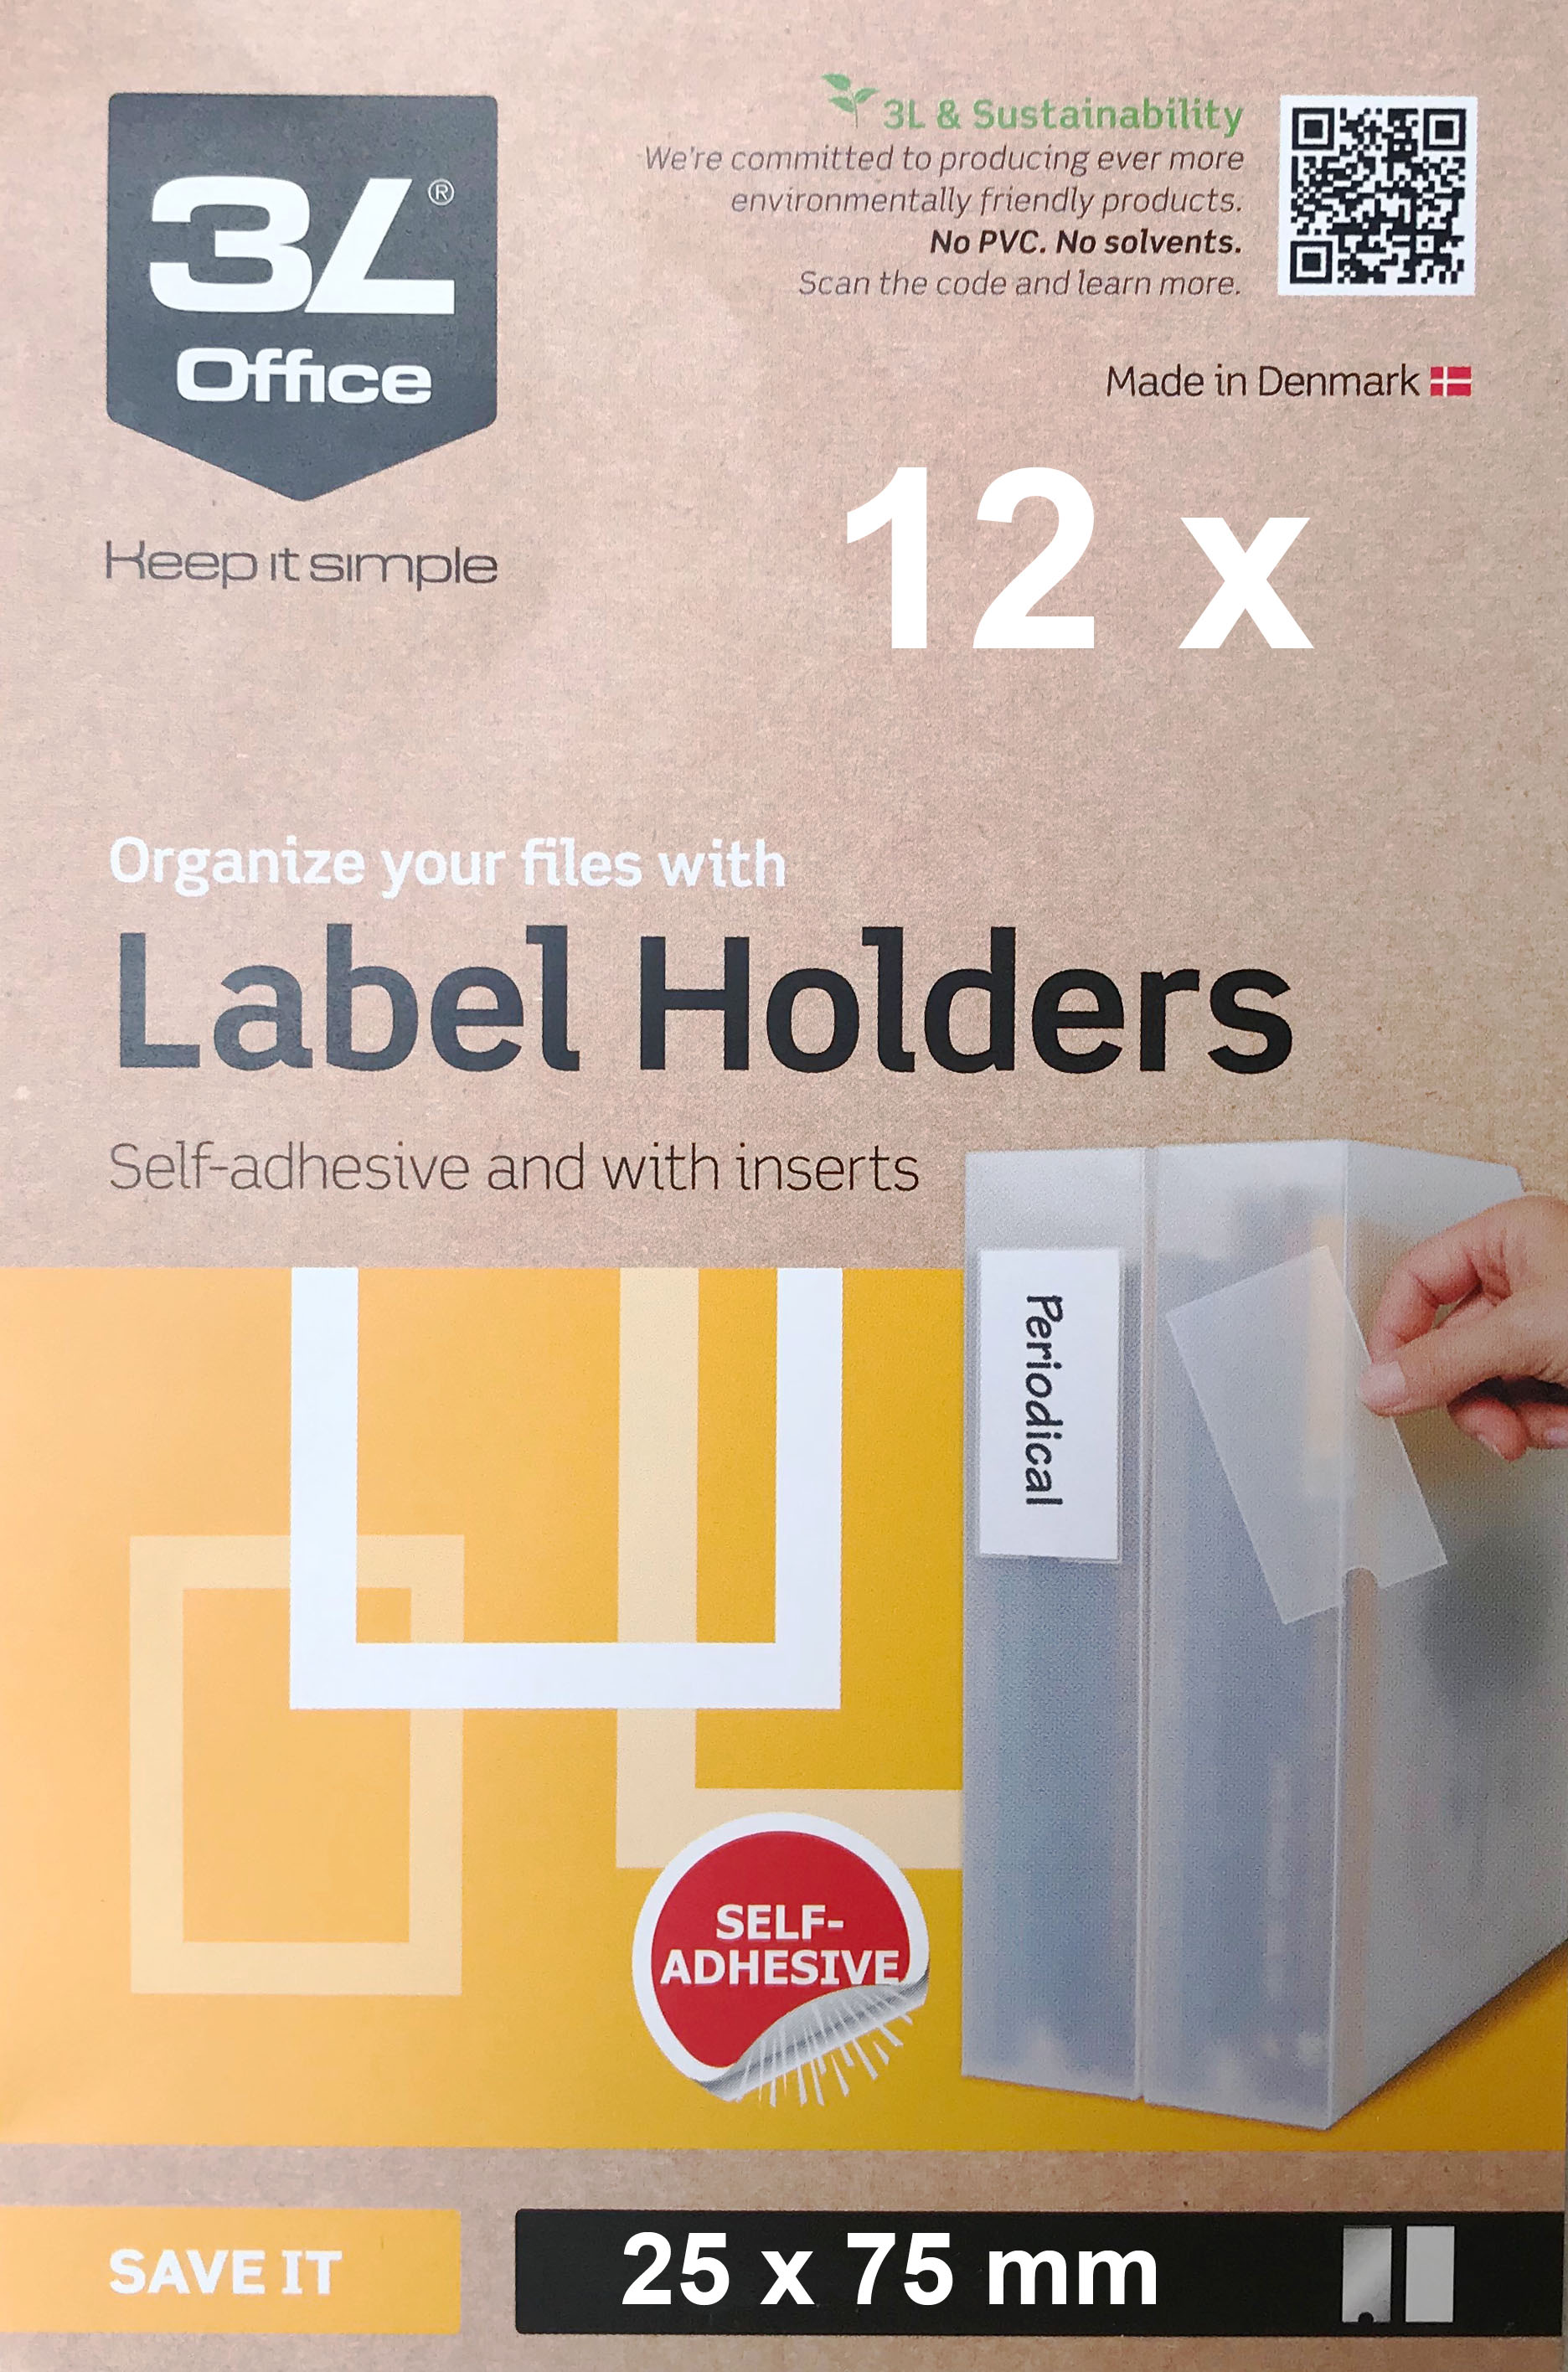 3L Label holders - 25 x 75 mm